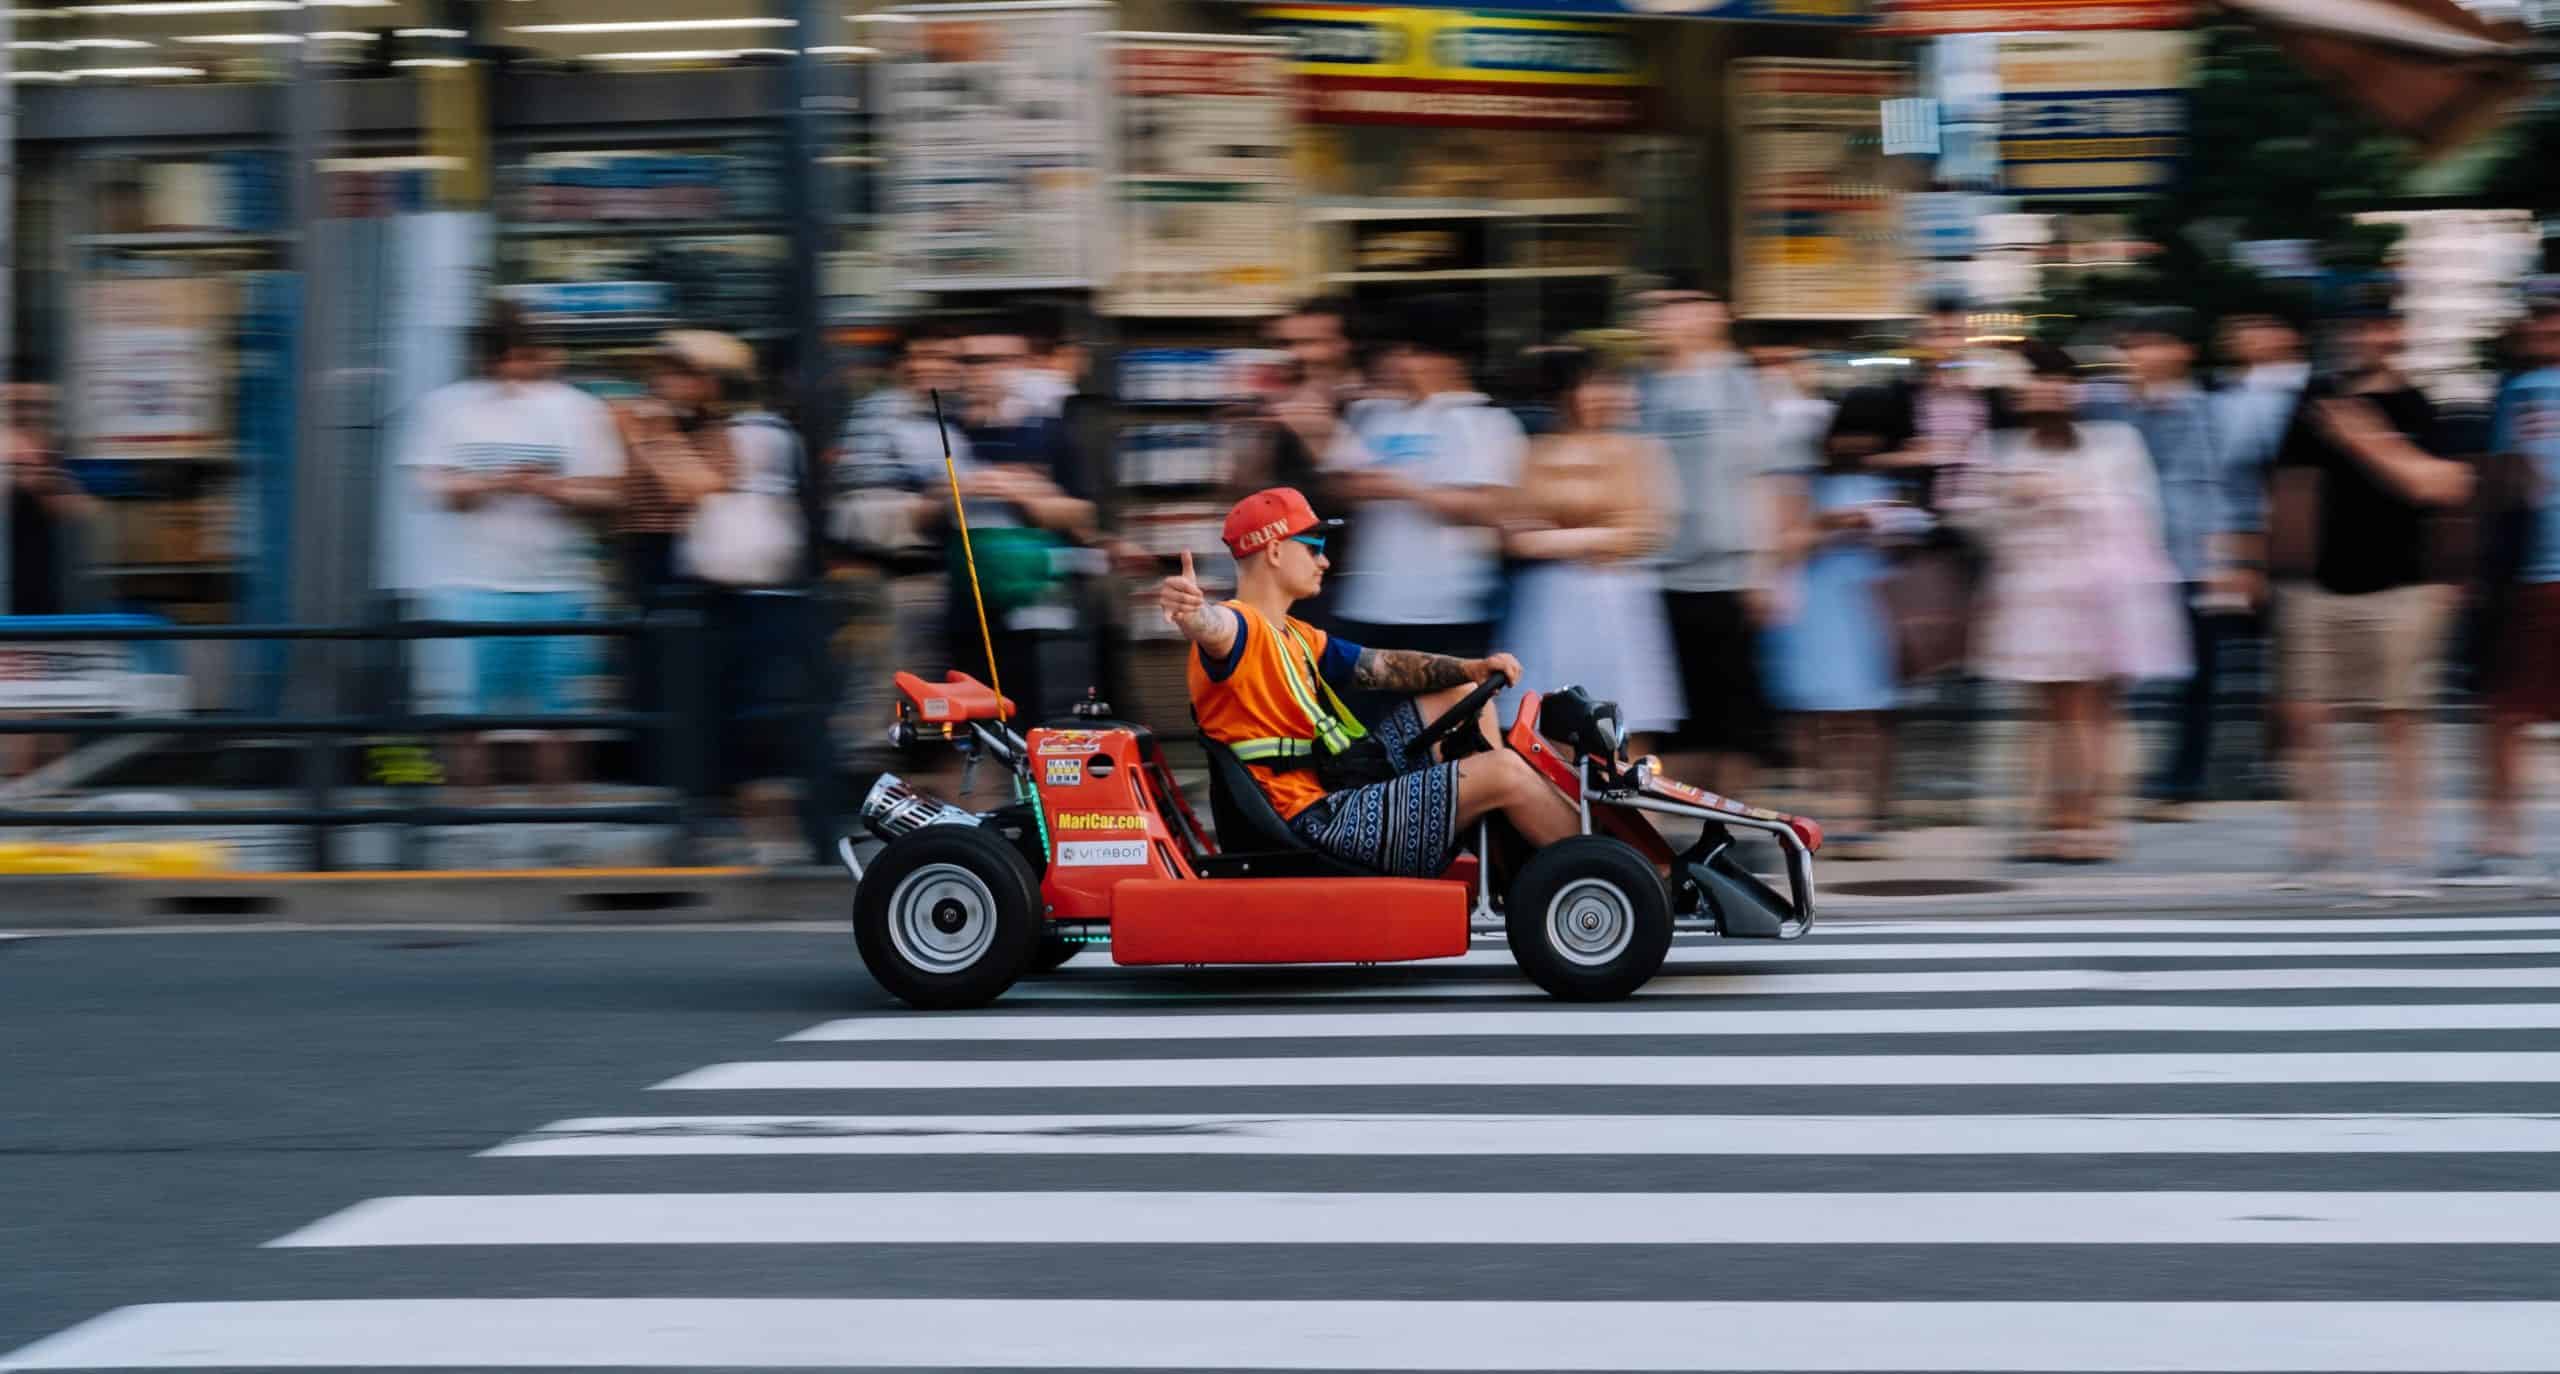 Mario Kart in Tokyo Guide